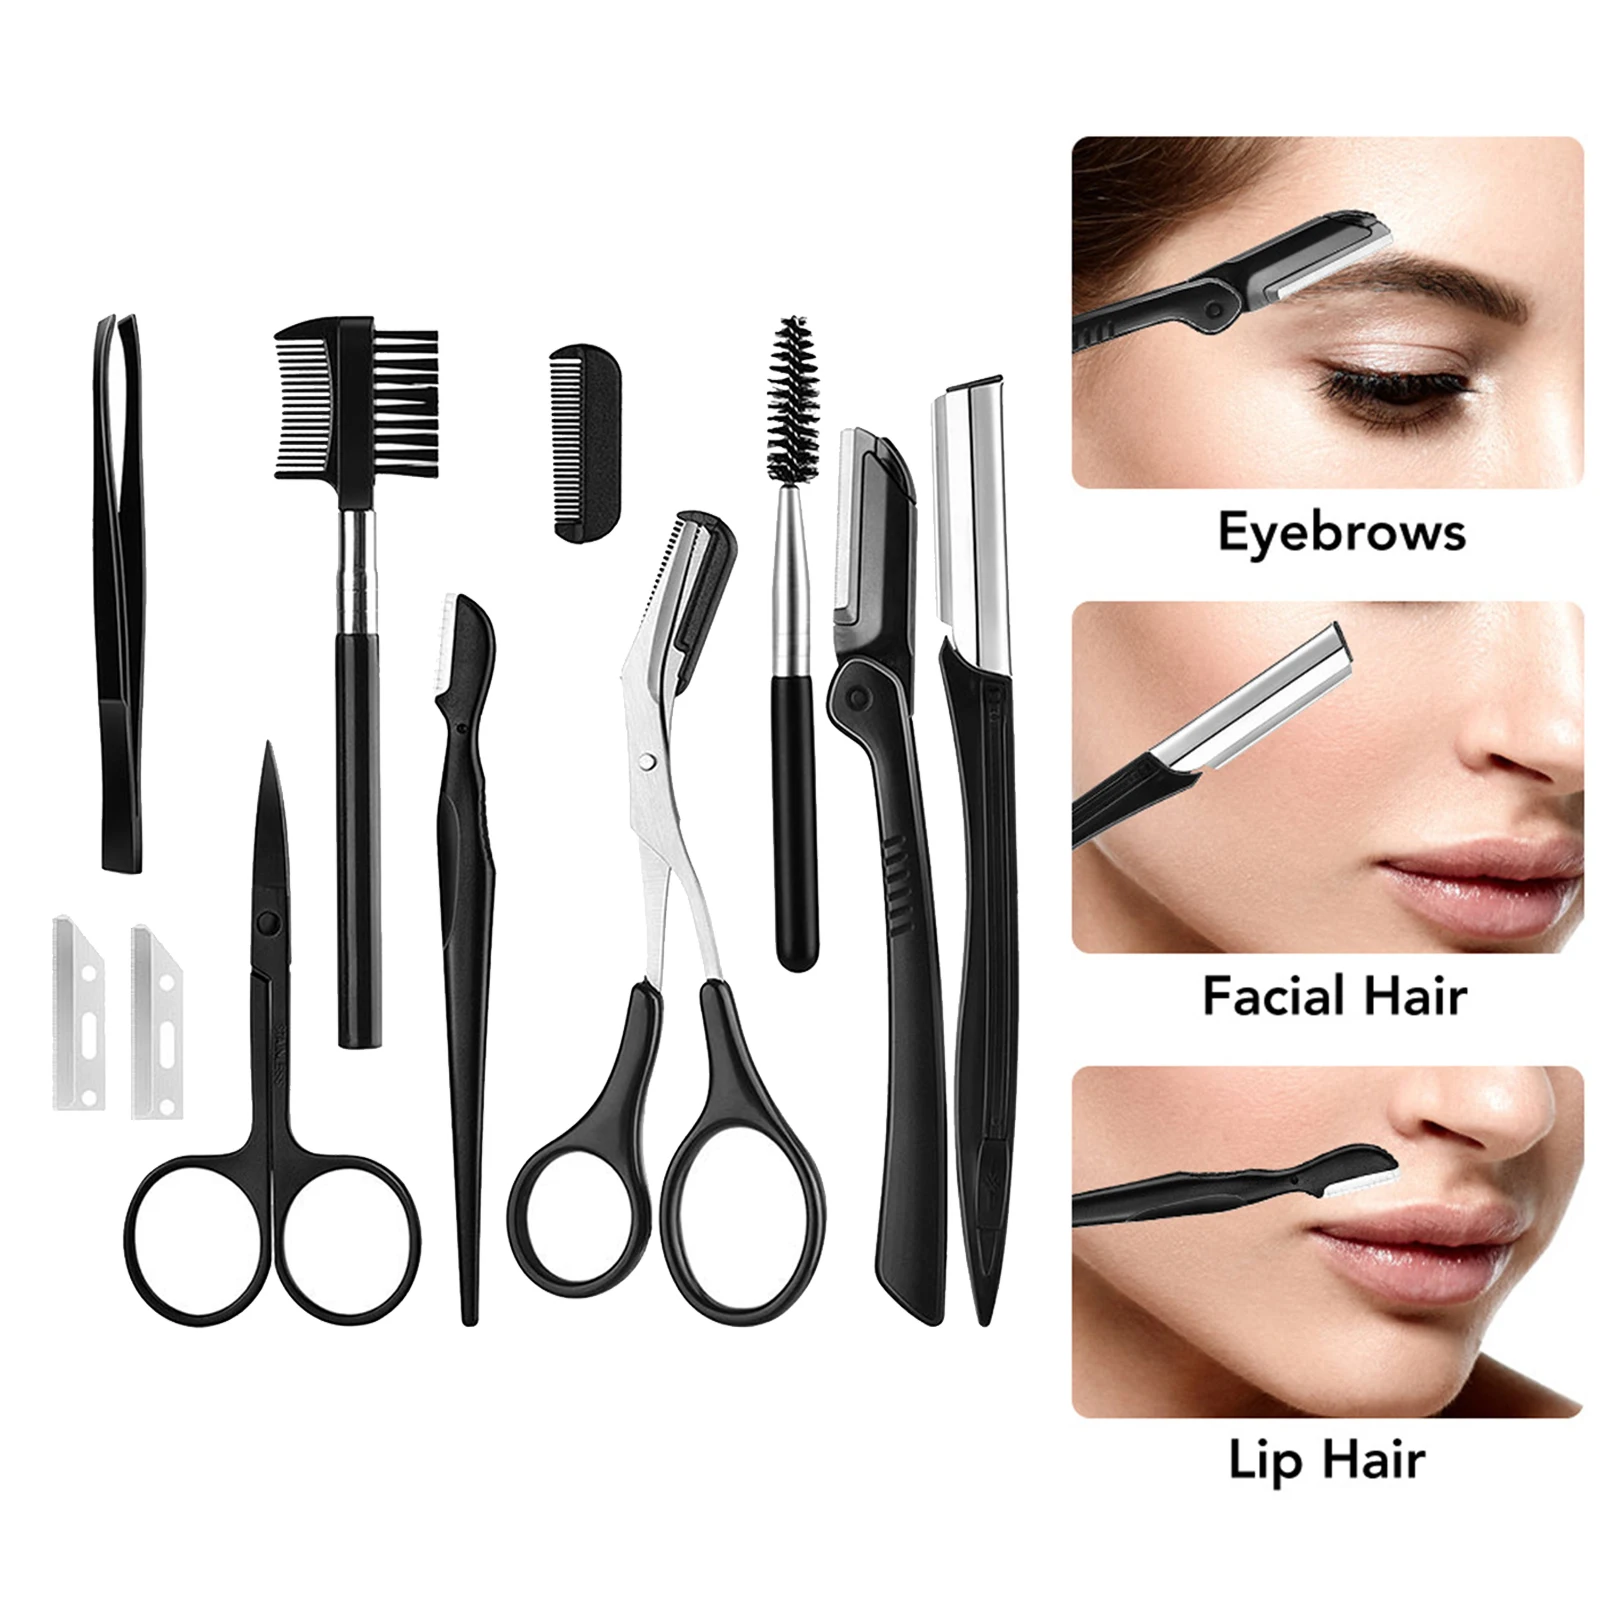 11 In 1 Pro Eyebrow Razor Facial Hair Trimmer Shaper Tweezer Scissors Brush Eye Brow Grooming Trimming Kit Makeup Tool